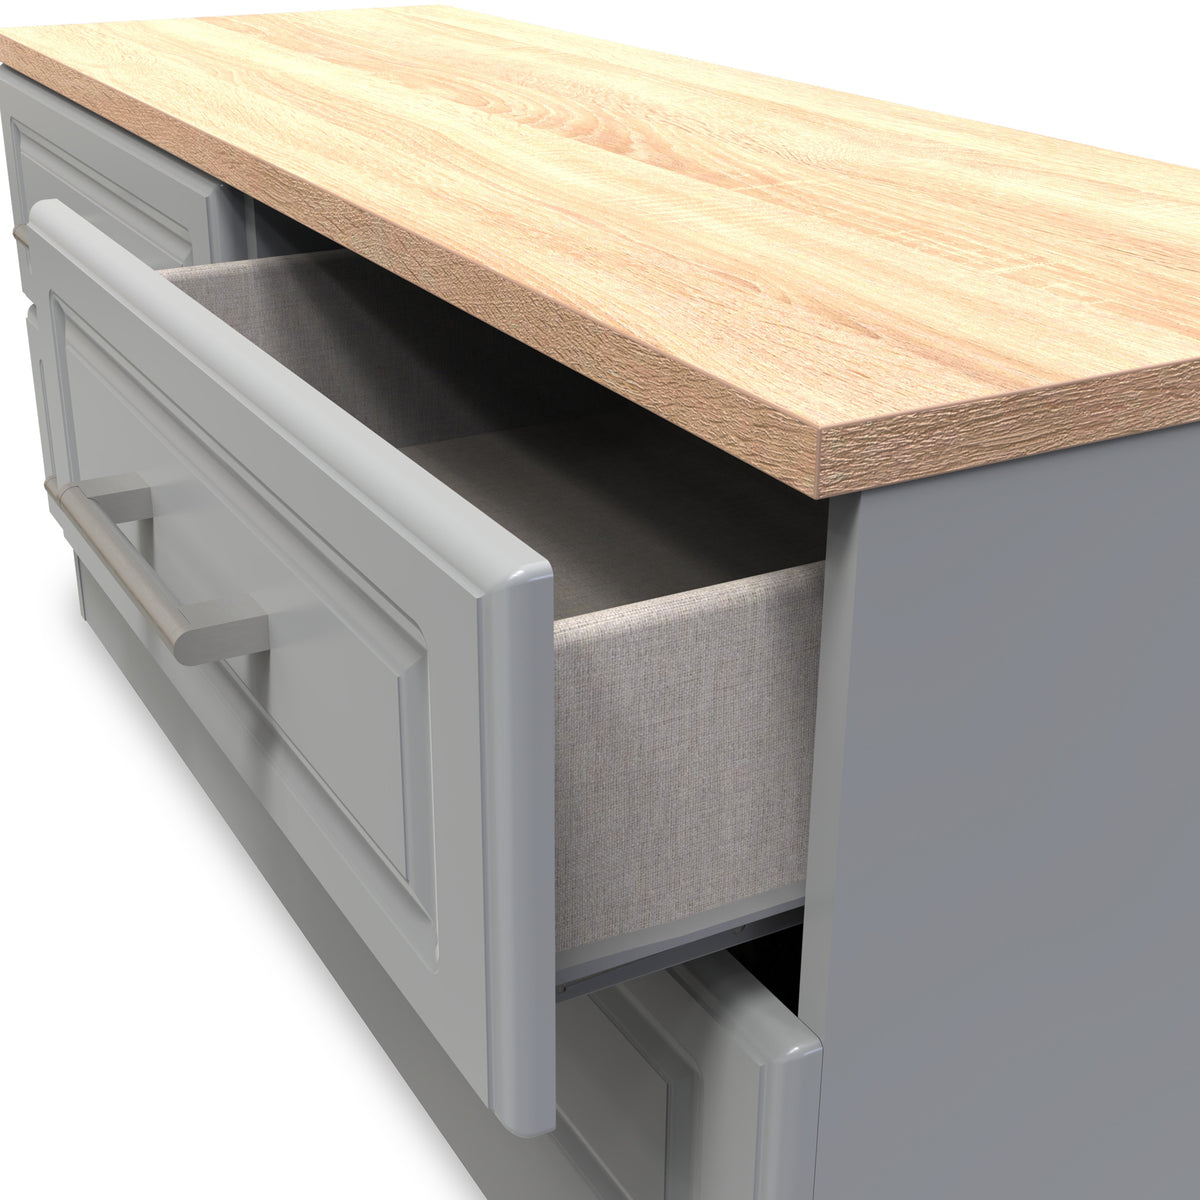 Talland Grey 4 Drawer Low Storage Unit by Roseland Furniture